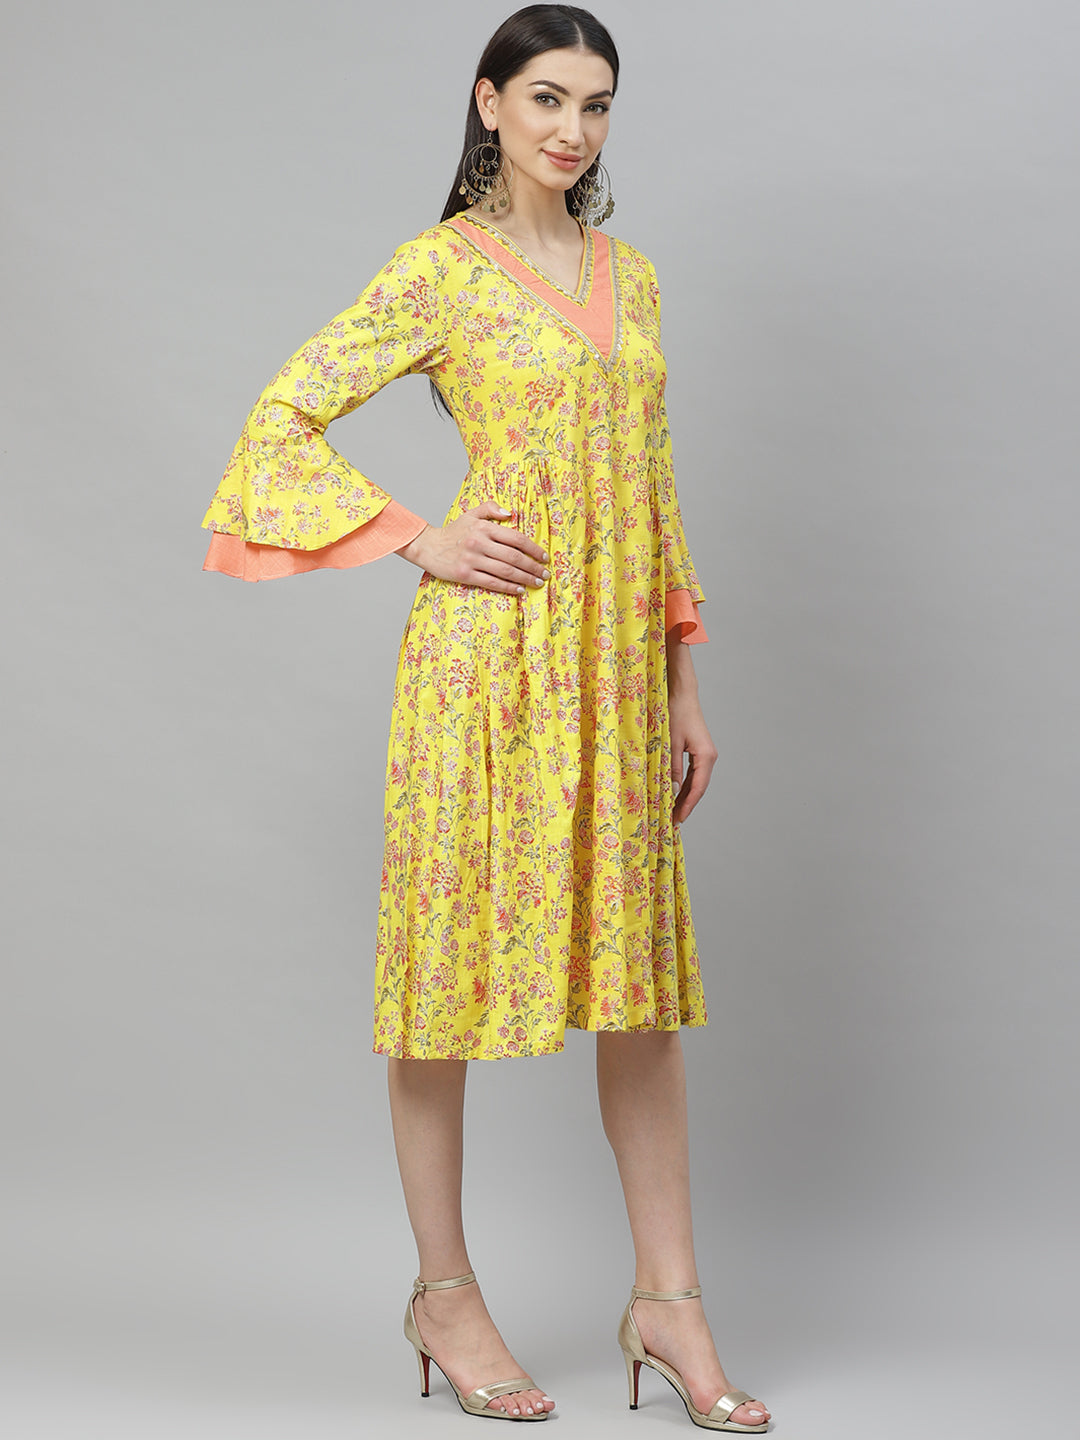 Myshka Women's Yellow Cotton Printed  3/4 Sleeve V Neck Casual Dress